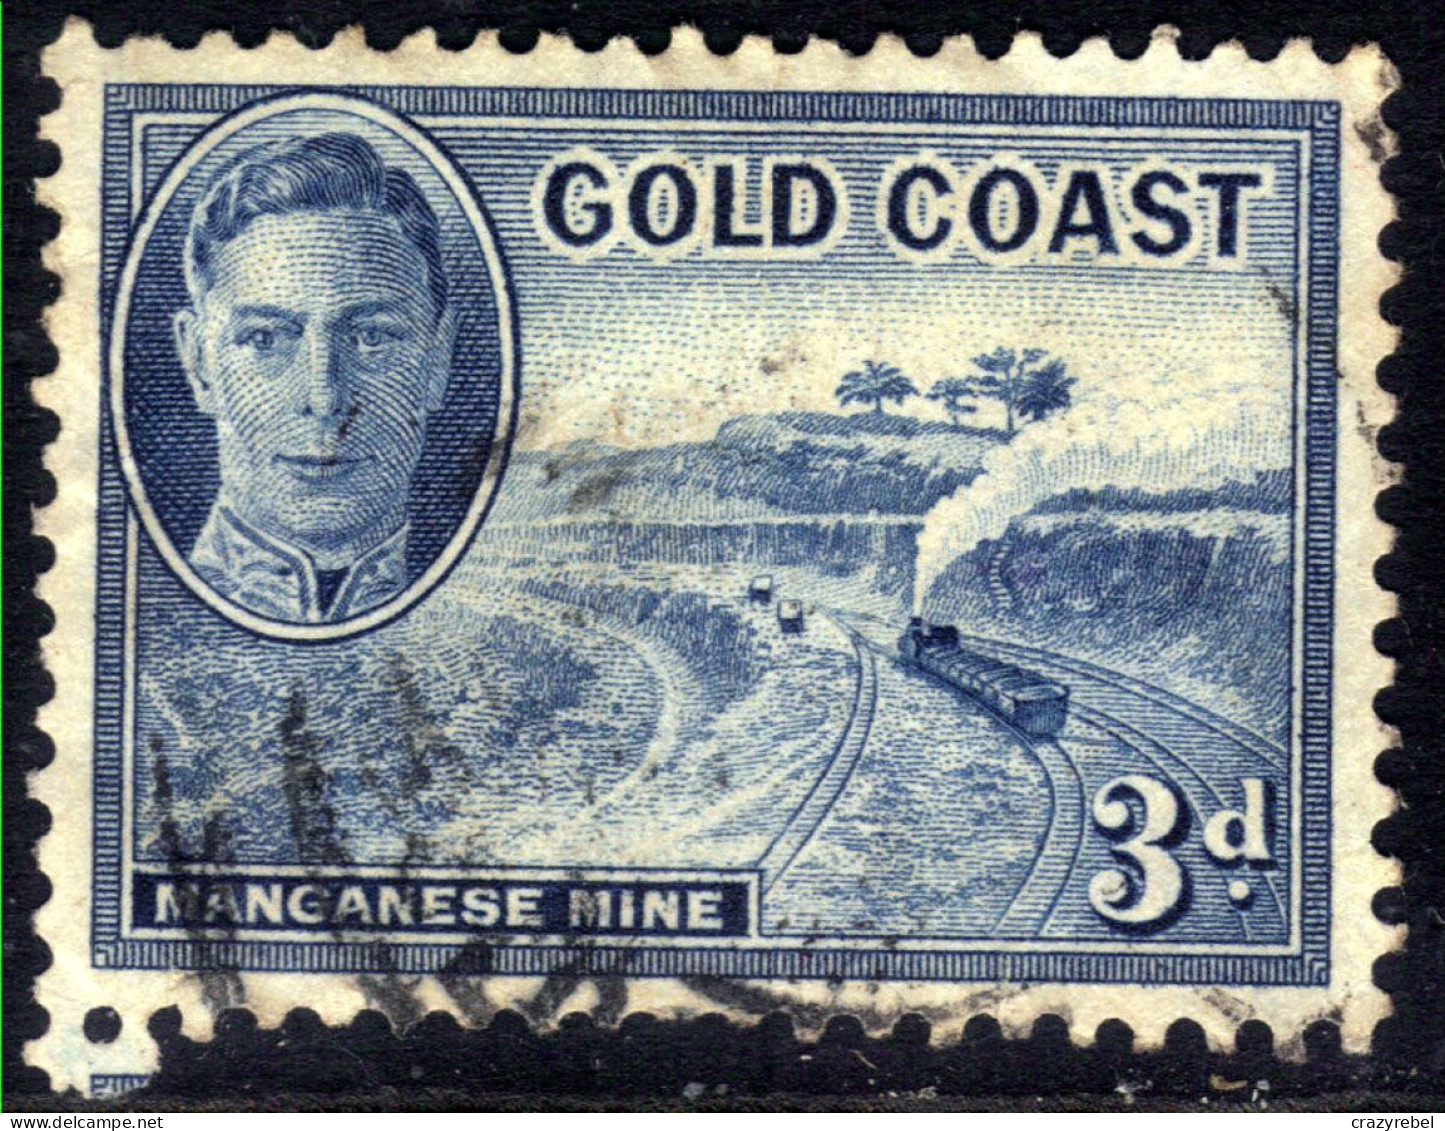 Gold Coast 1948 KGV1  3d Blue Used SG 140 ( A286 ) - Côte D'Or (...-1957)